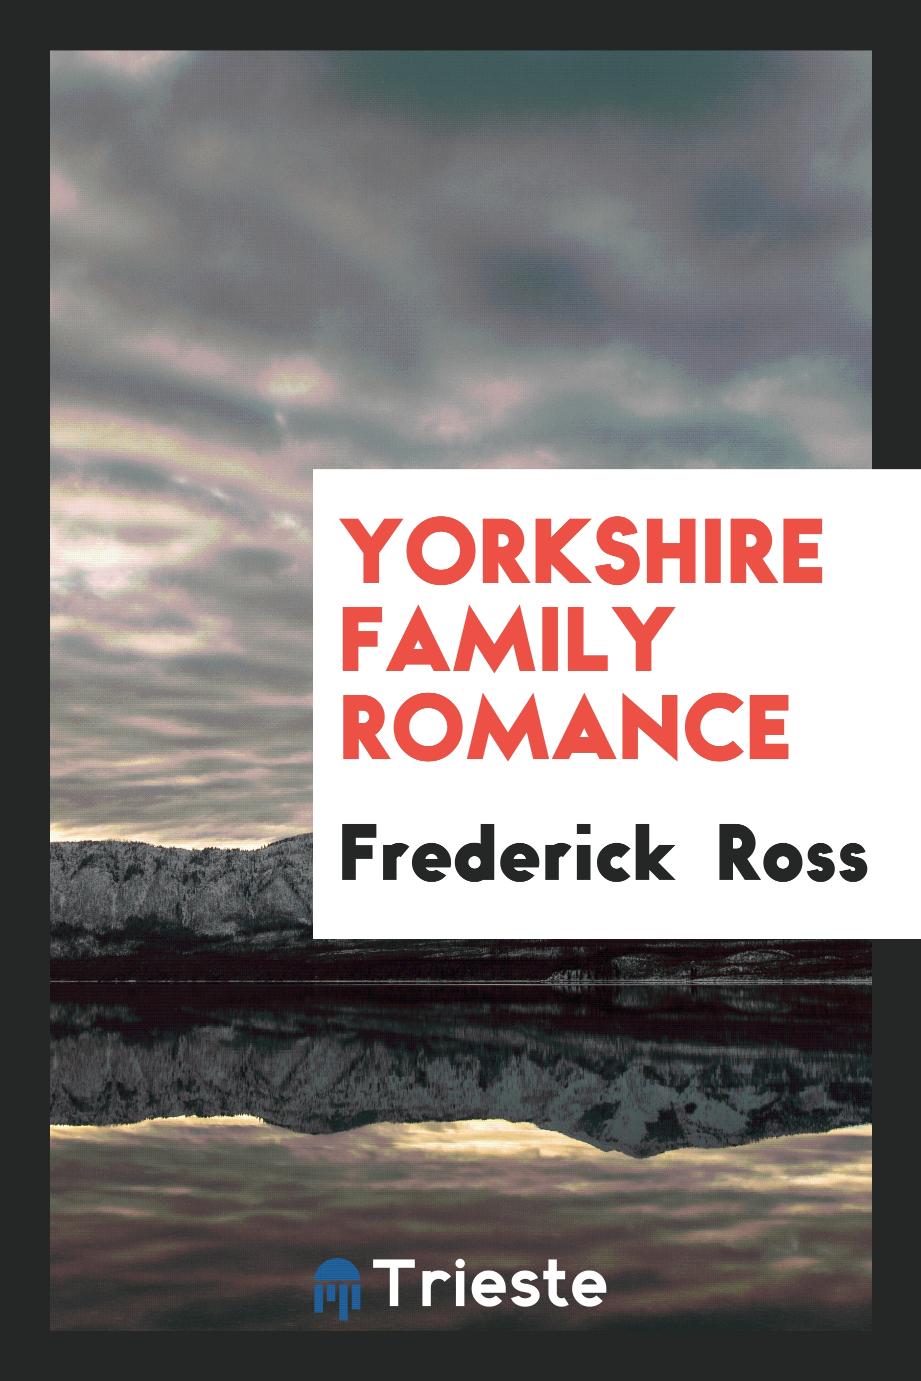 Yorkshire Family Romance